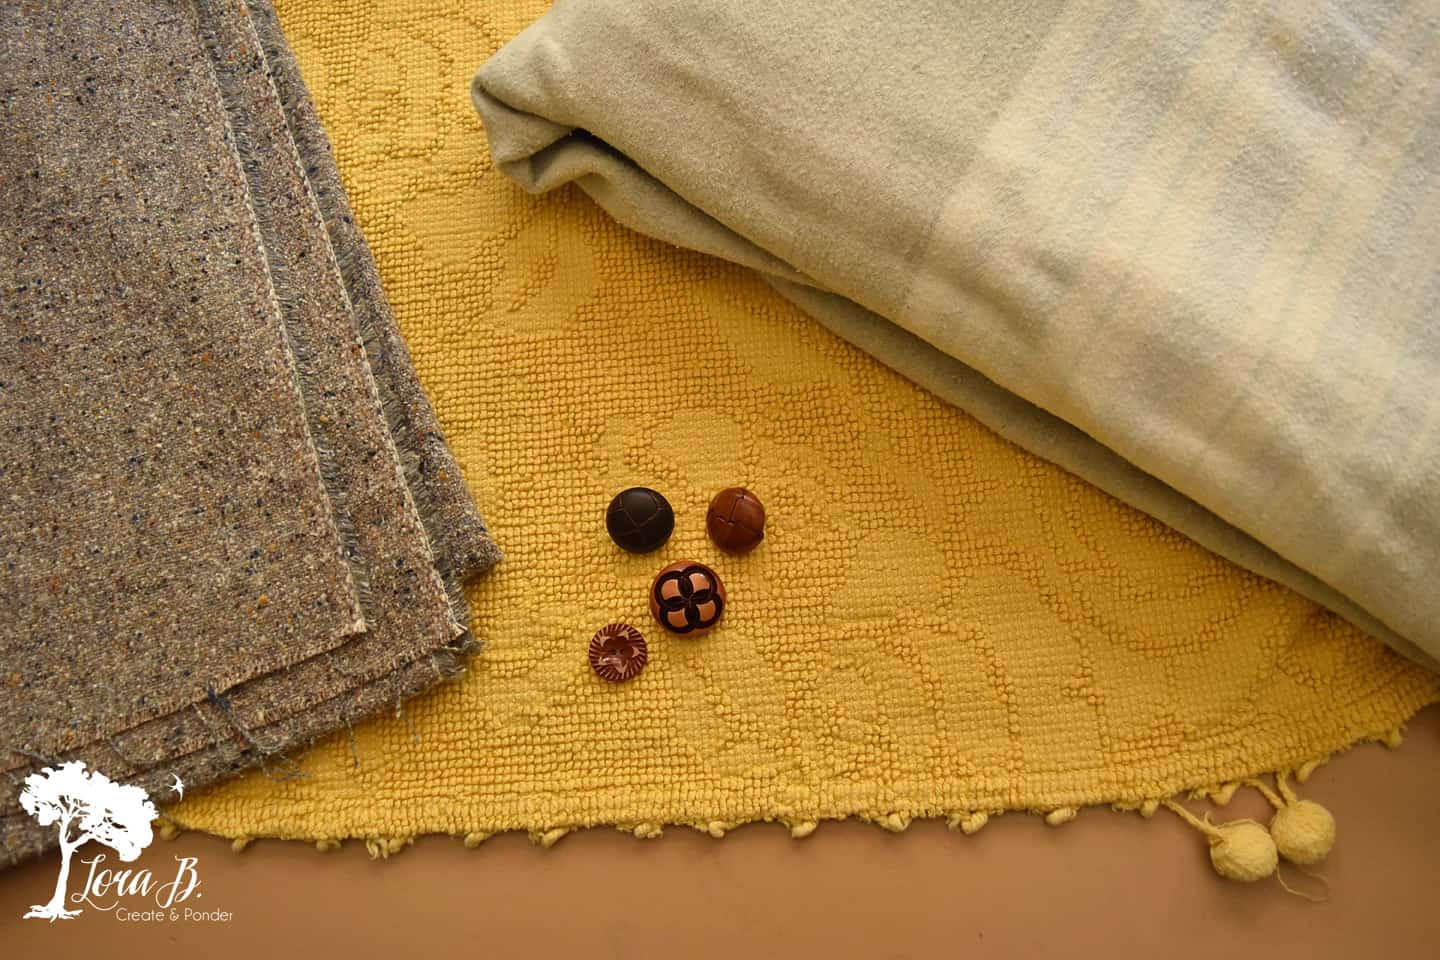 Vintage textiles